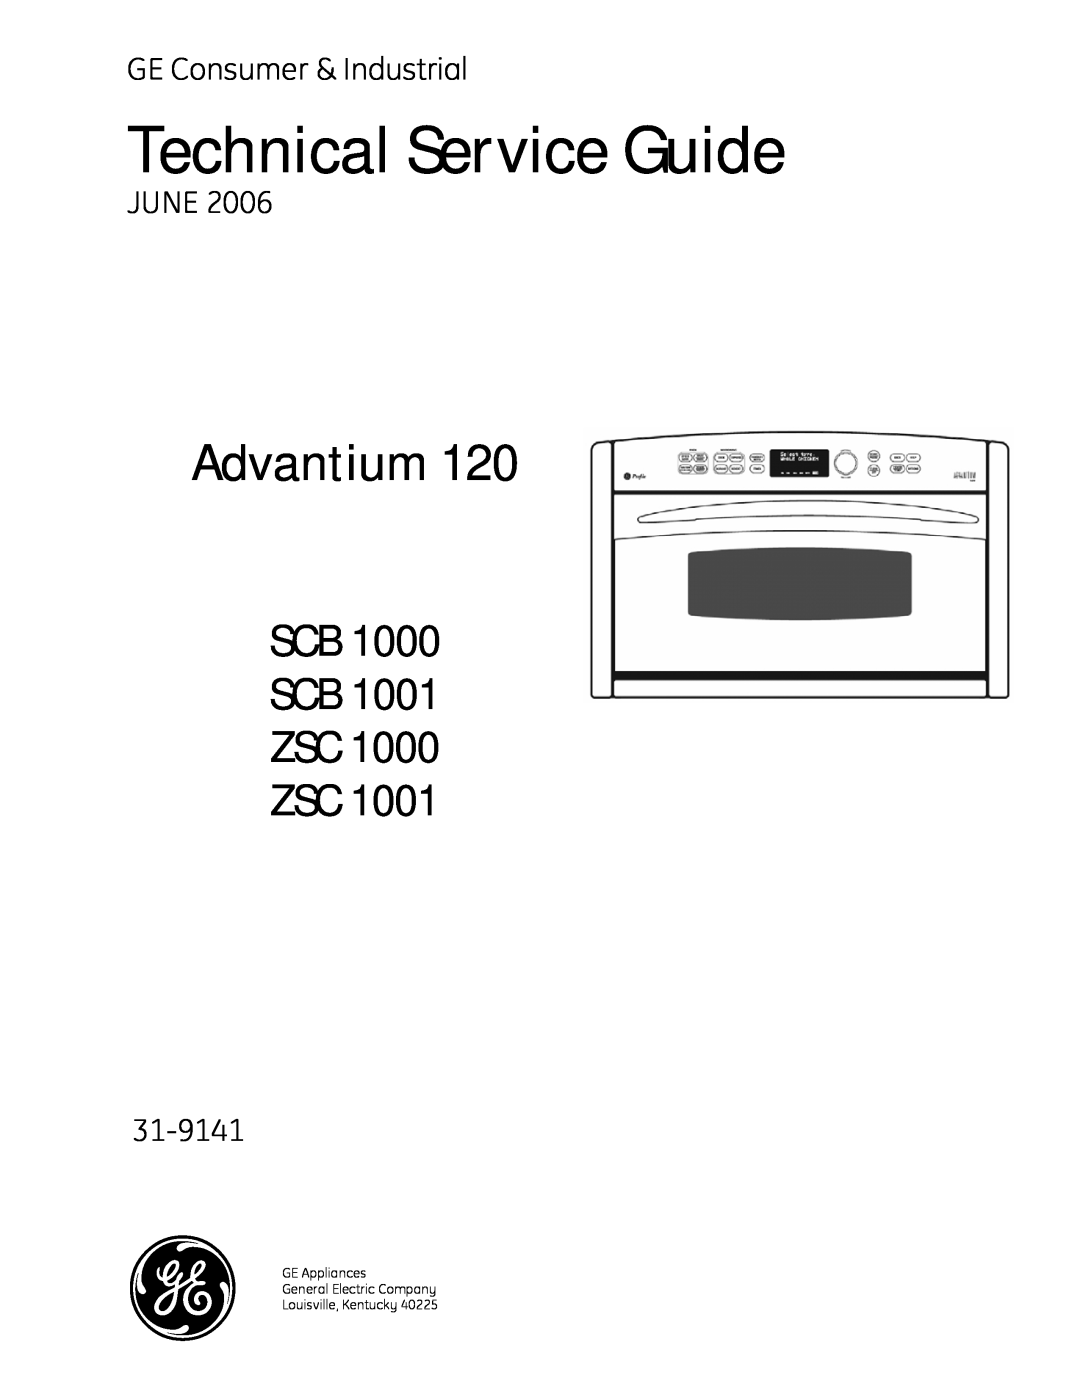 GE ZSC 1000, ZSC 1001 manual Technical Service Guide, Advantium, Scb Scb Zsc Zsc, GE Consumer & Industrial, June, 31-9141 